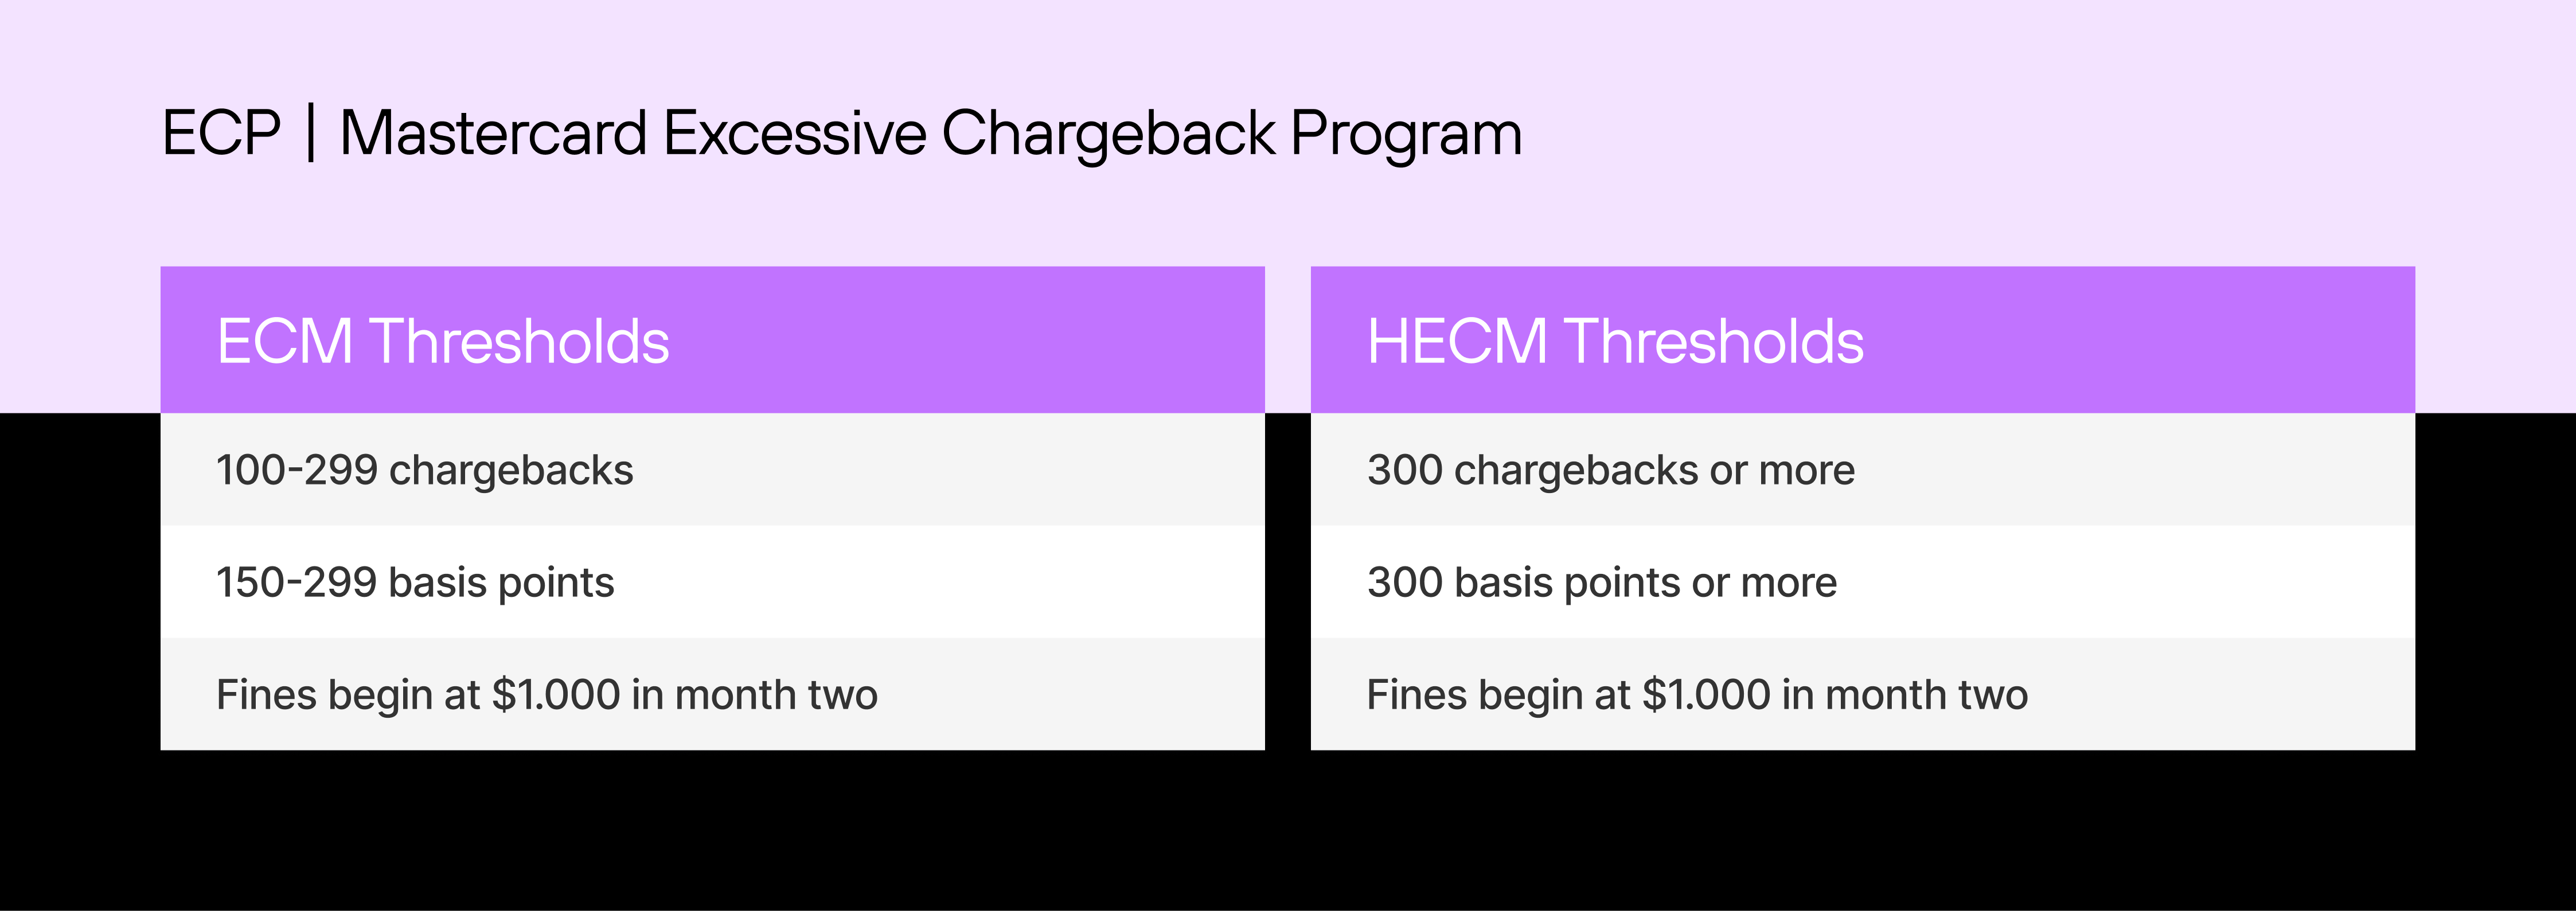 mastercard excessive chargeback program thresholds